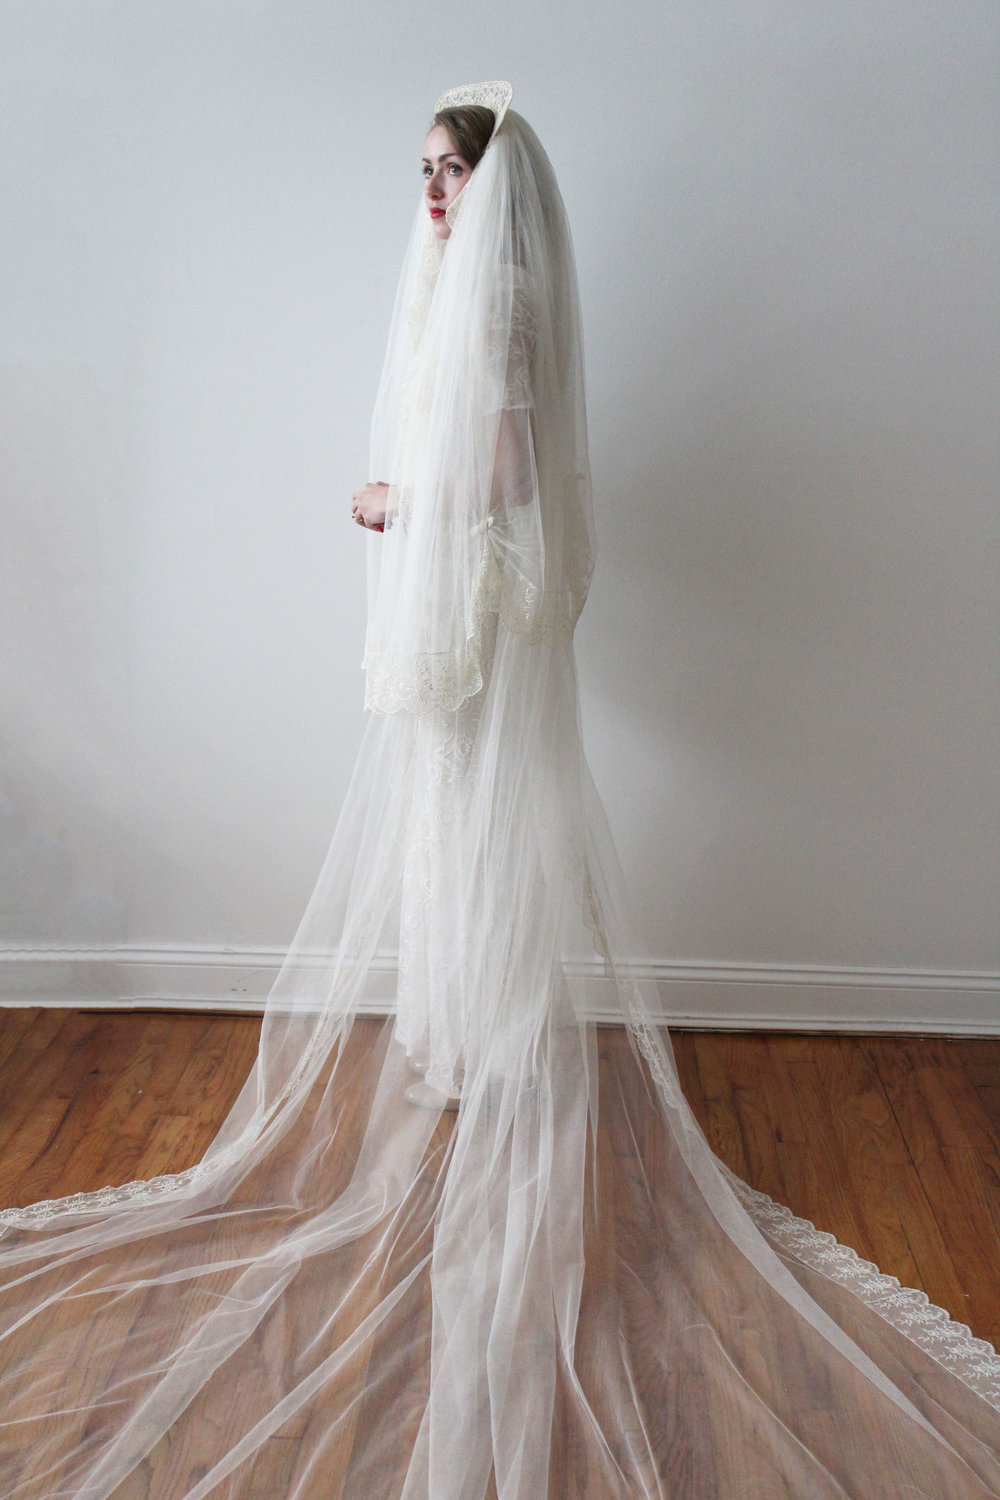 Triple Rosette with Veil  Headband veil, Bride headpiece, Vintage veils